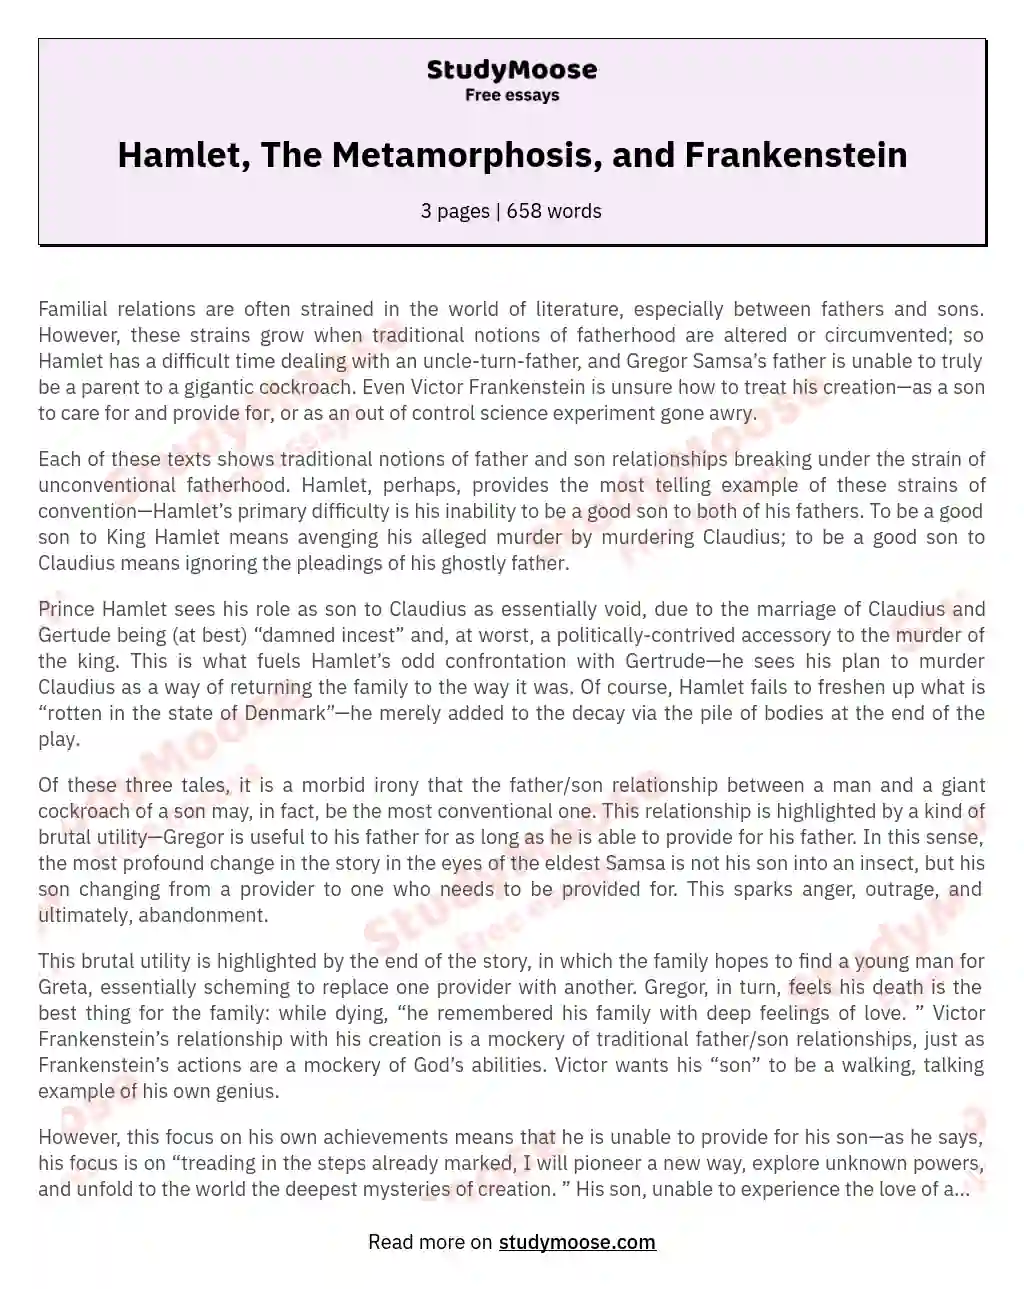 Hamlet, The Metamorphosis, and Frankenstein essay